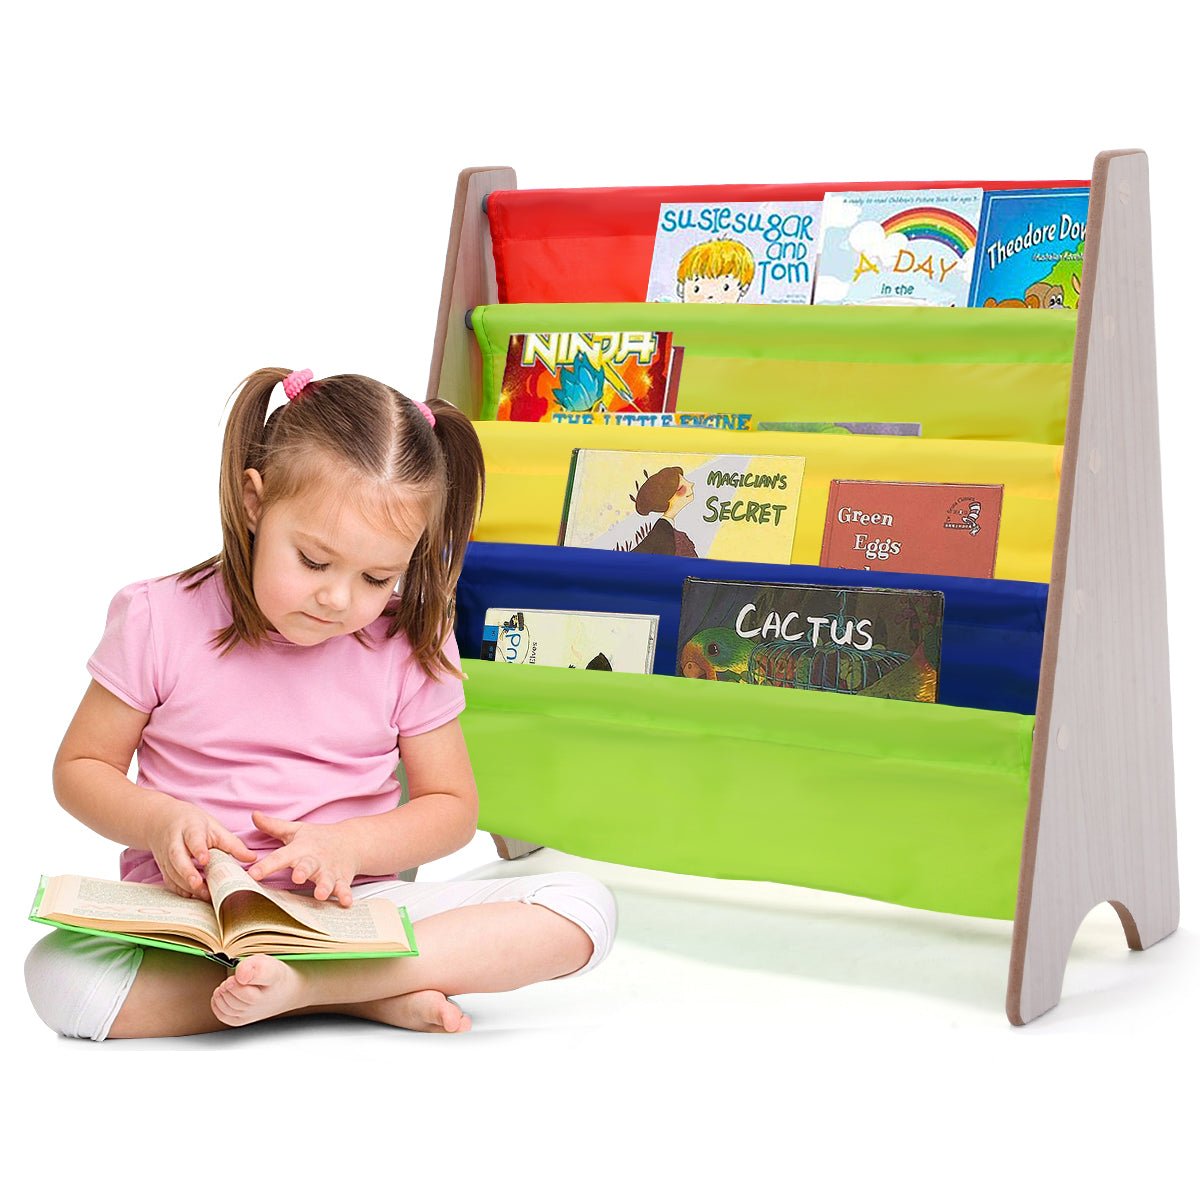 Children's Book Organizer - 4 Compartments for Neat Book Storage